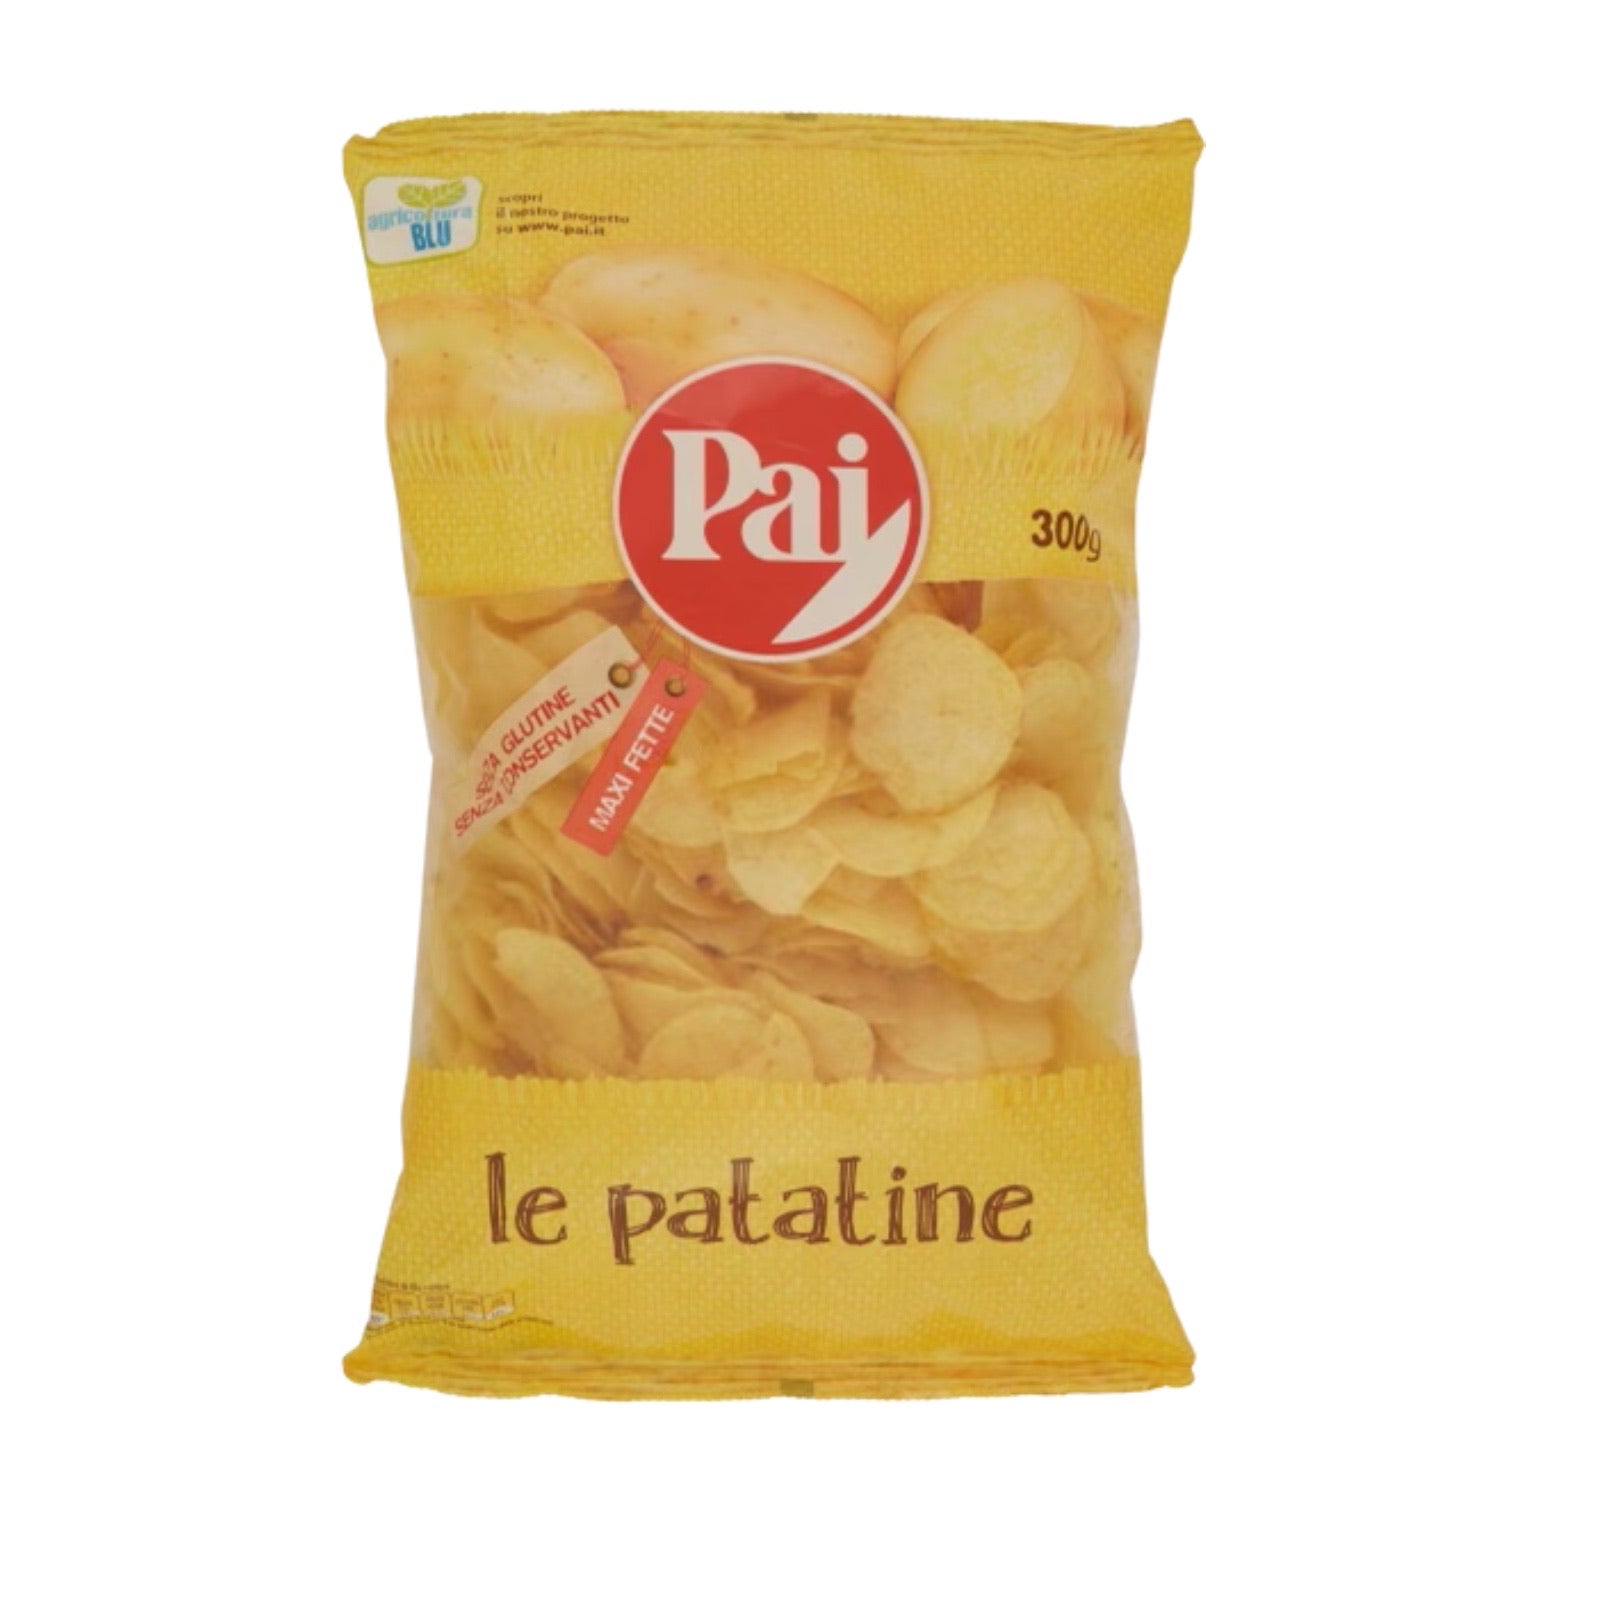 Pai Classic Italian potato chips 300g